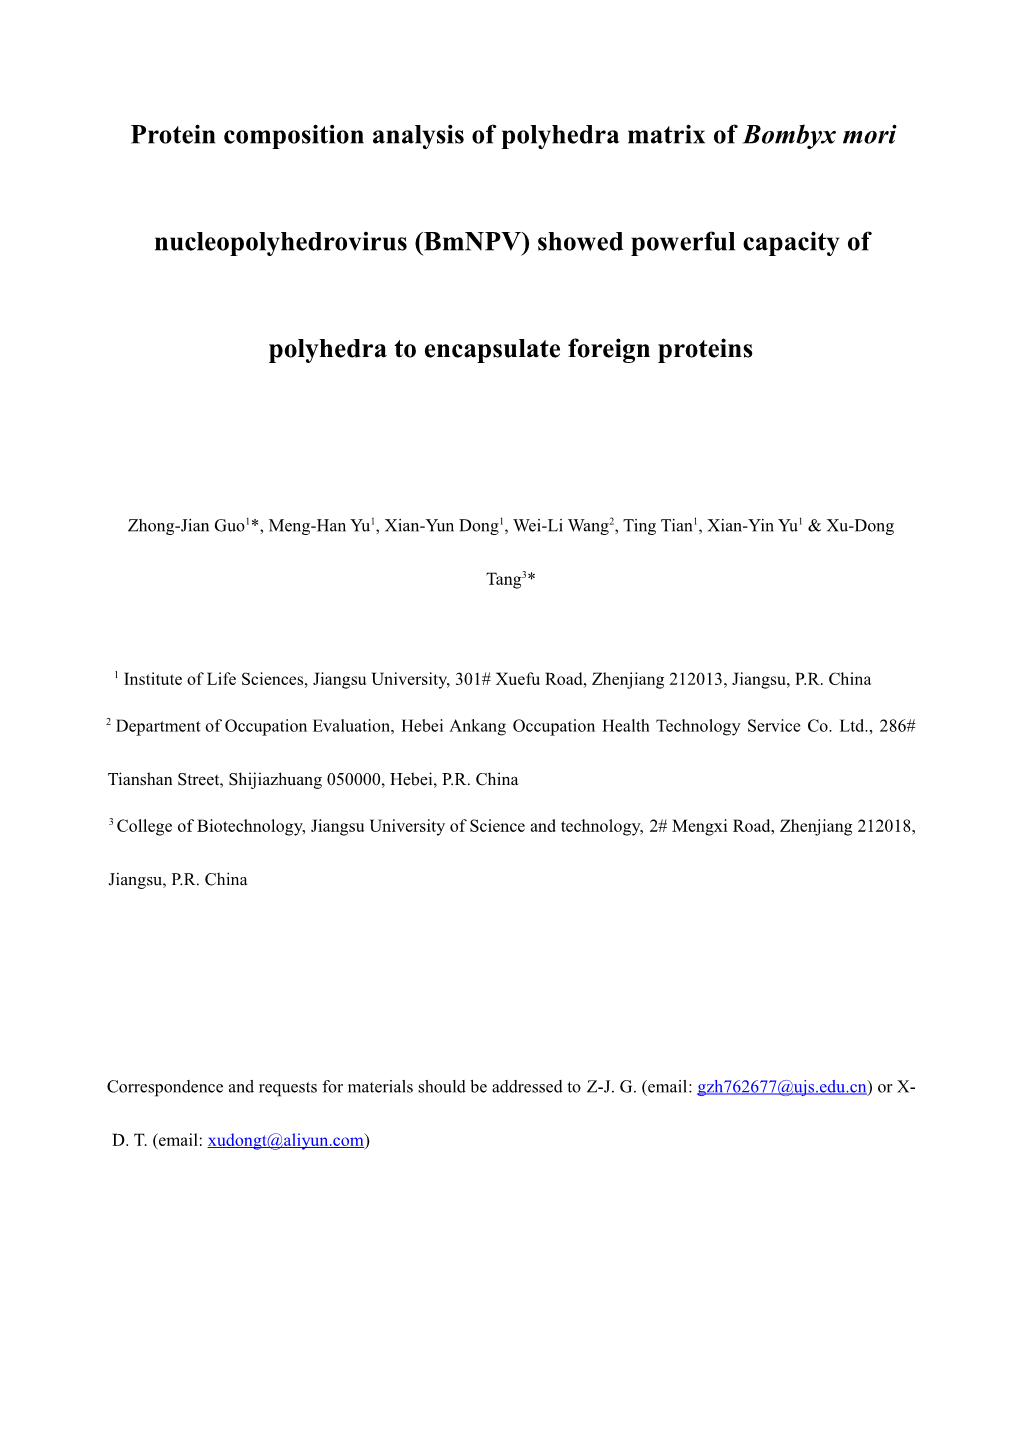 Protein Composition Analysis of Polyhedra Matrix of Bombyx Mori Nucleopolyhedrovirus (Bmnpv)